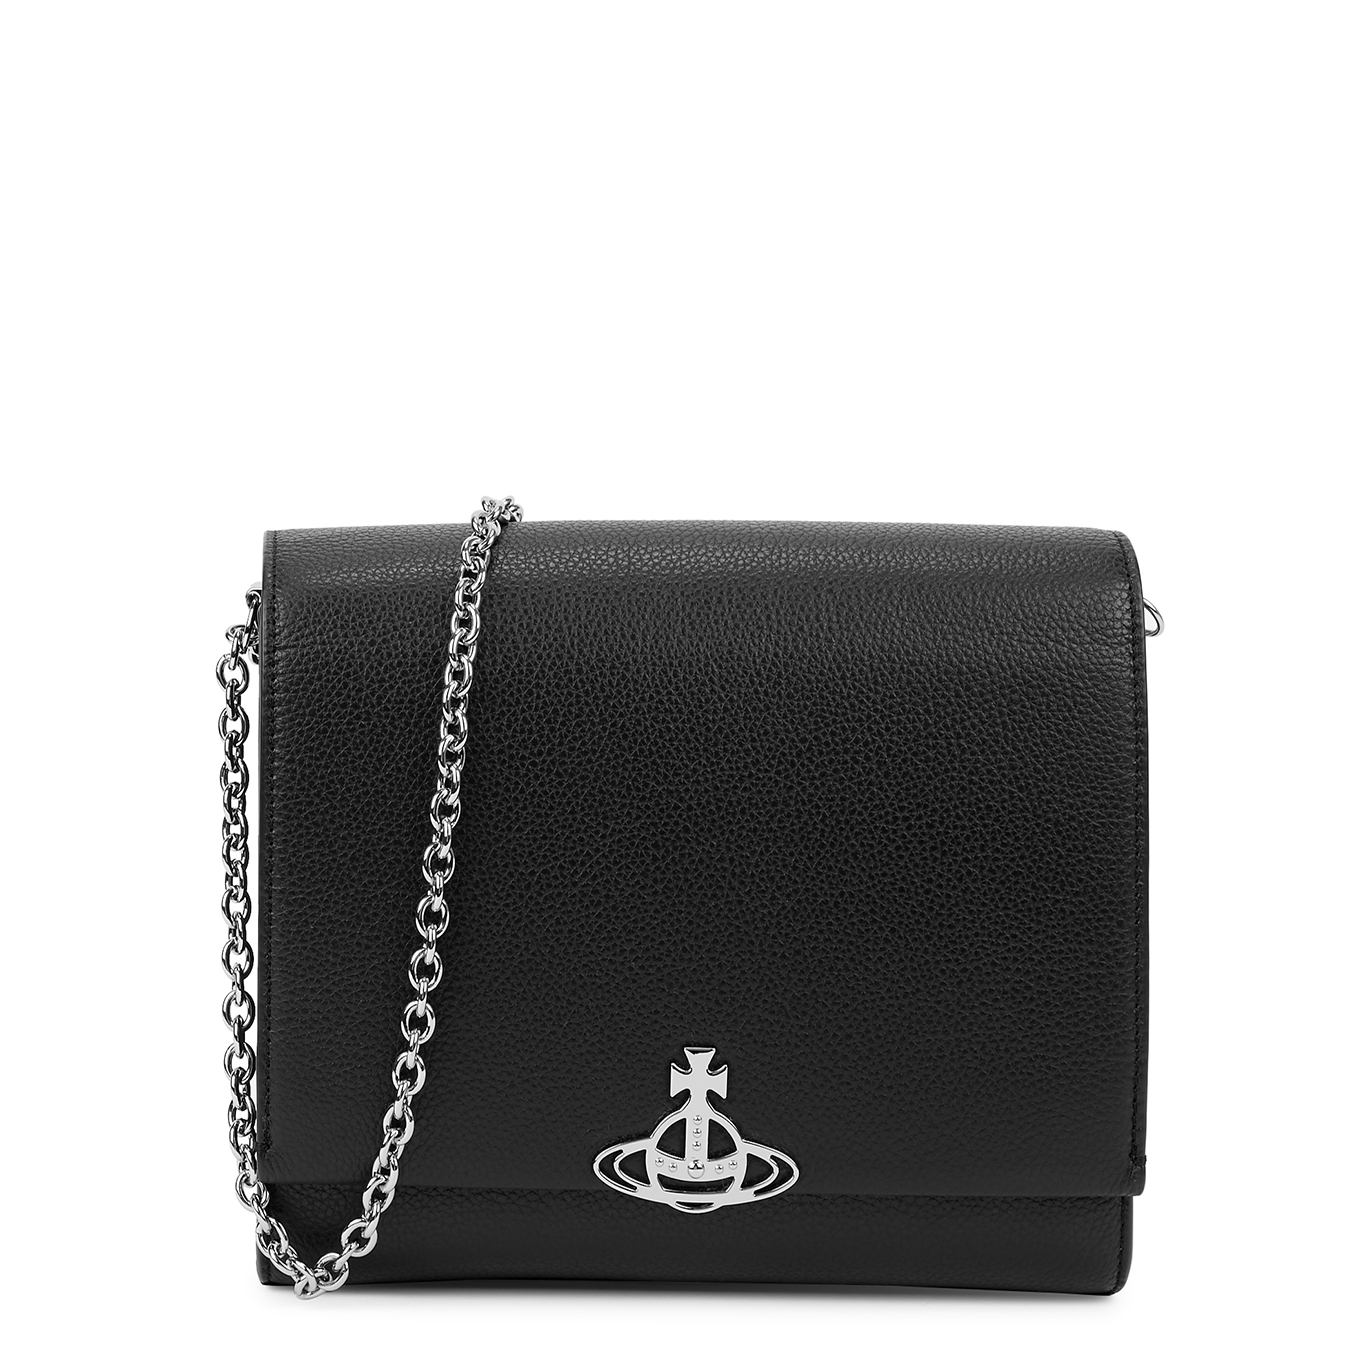 Vivienne Westwood Lucy Medium Black Leather Cross-body Bag